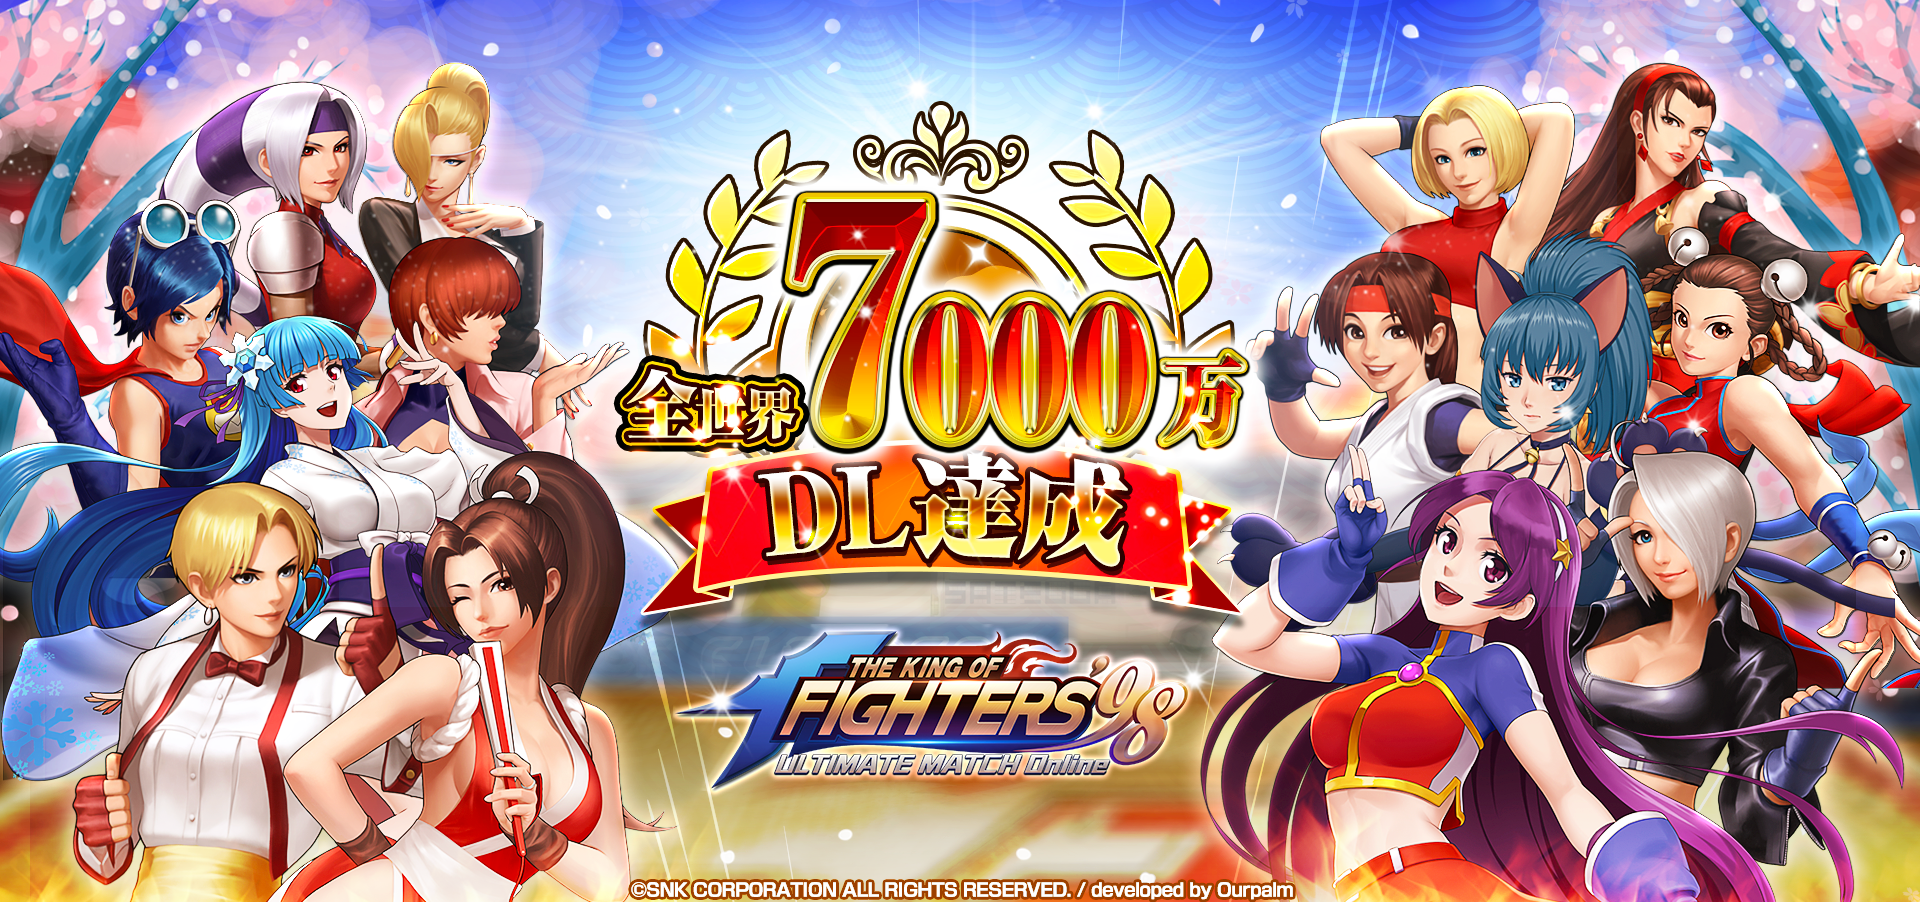 The King Of Fighters 98 Ultimate Match Online 全世界累計ダウンロード数7000万を突破 Fingerfun Pte Ltd のプレスリリース